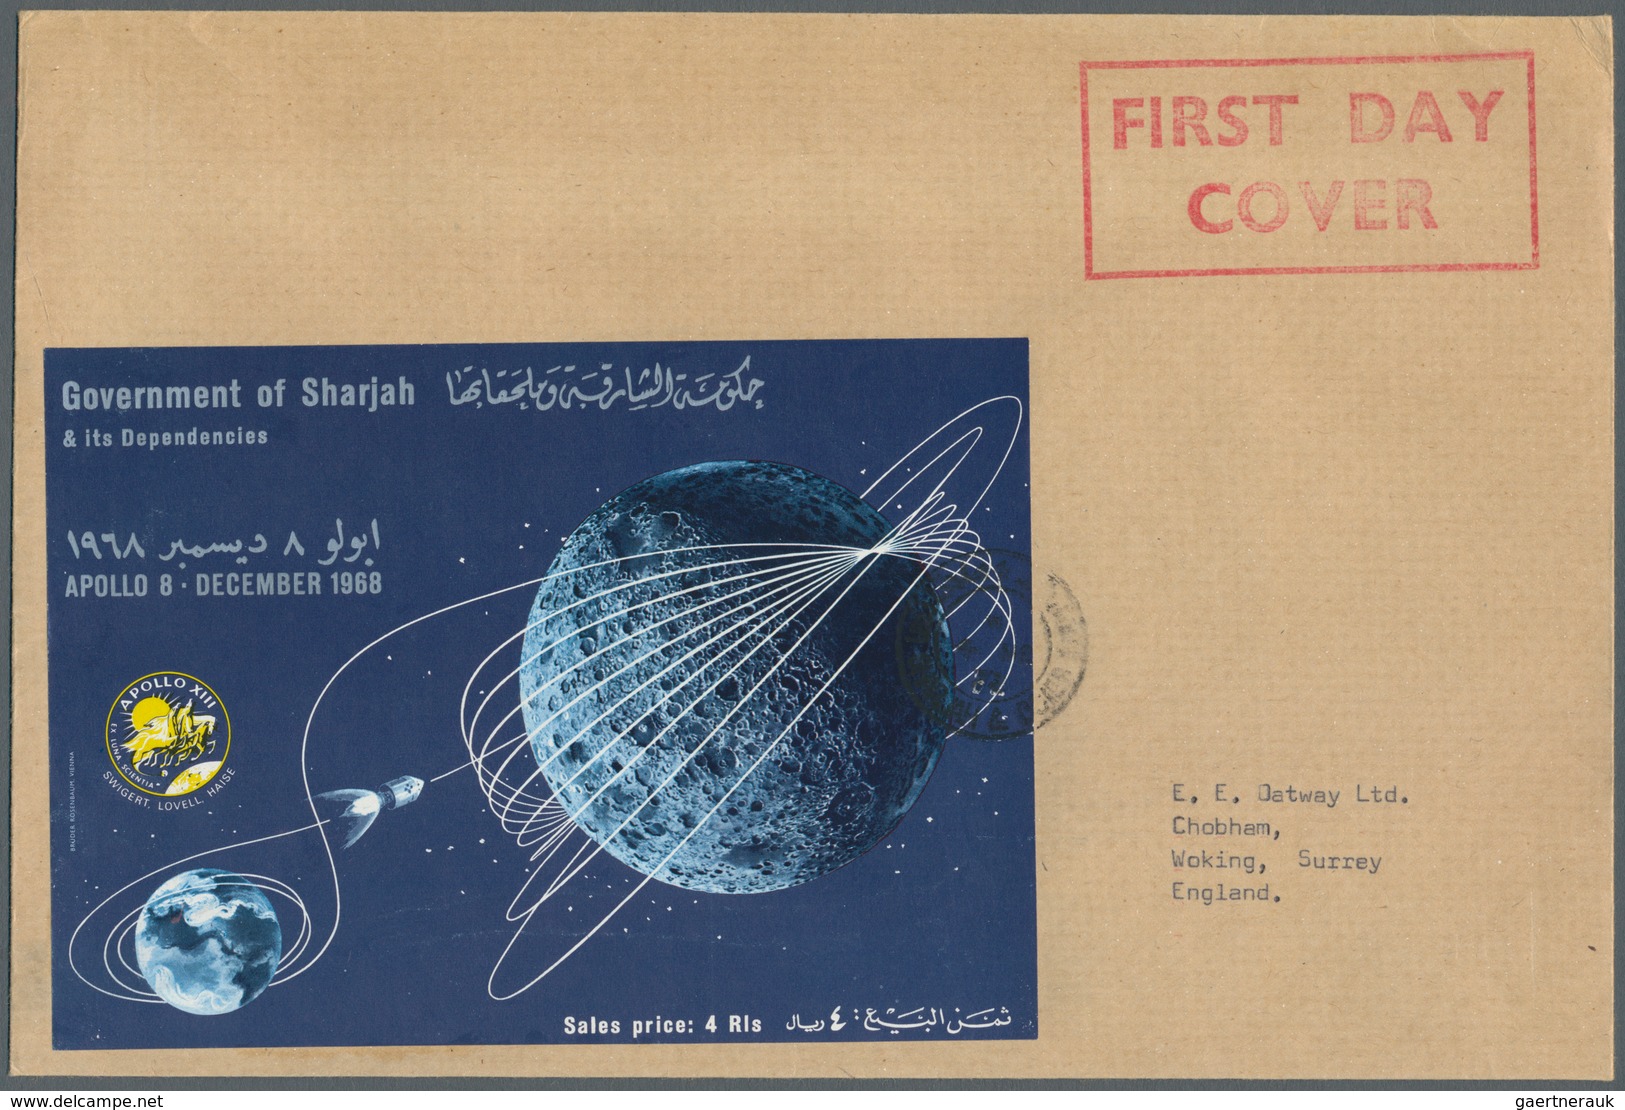 Thematik: Raumfahrt / astronautics: 1969/1971, Sharjah, assortment of 27 (mainly cacheted) envelopes